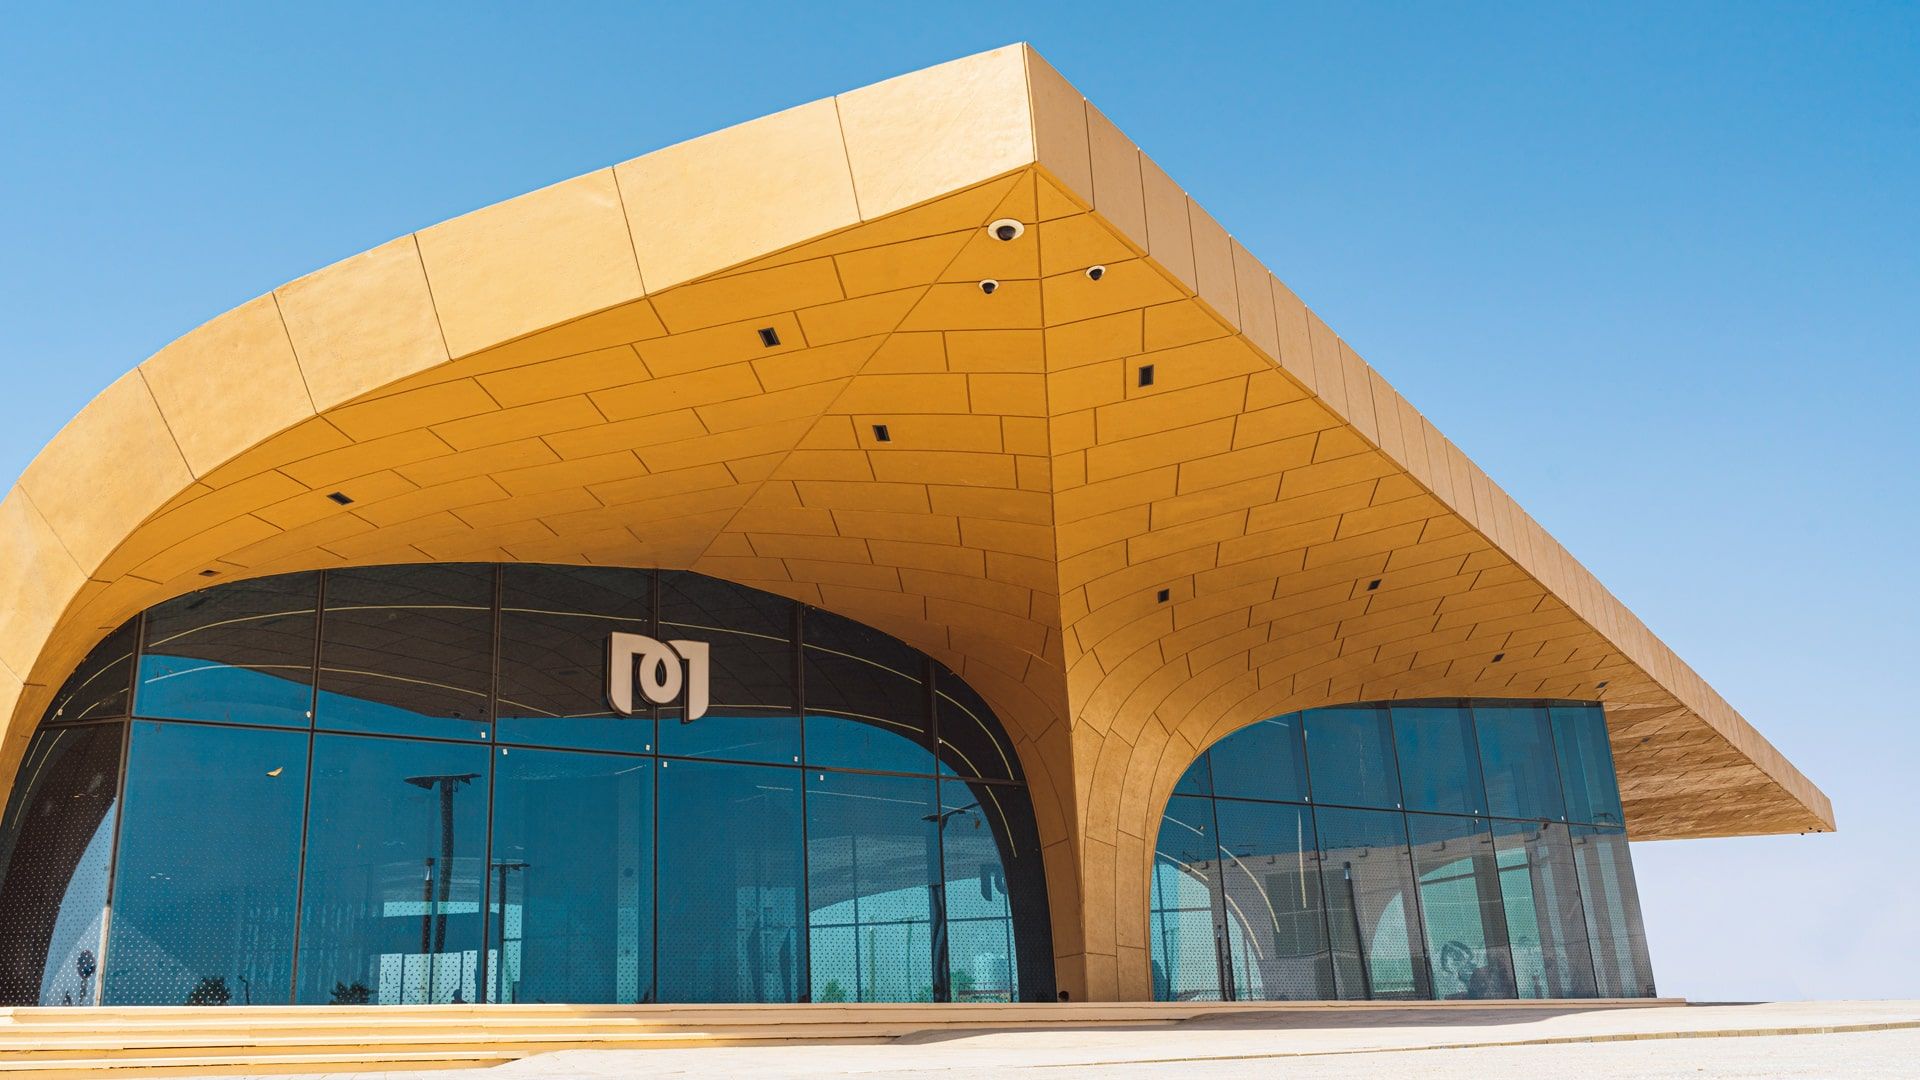 upg-structural-facade-qatar-metro-station-6-min